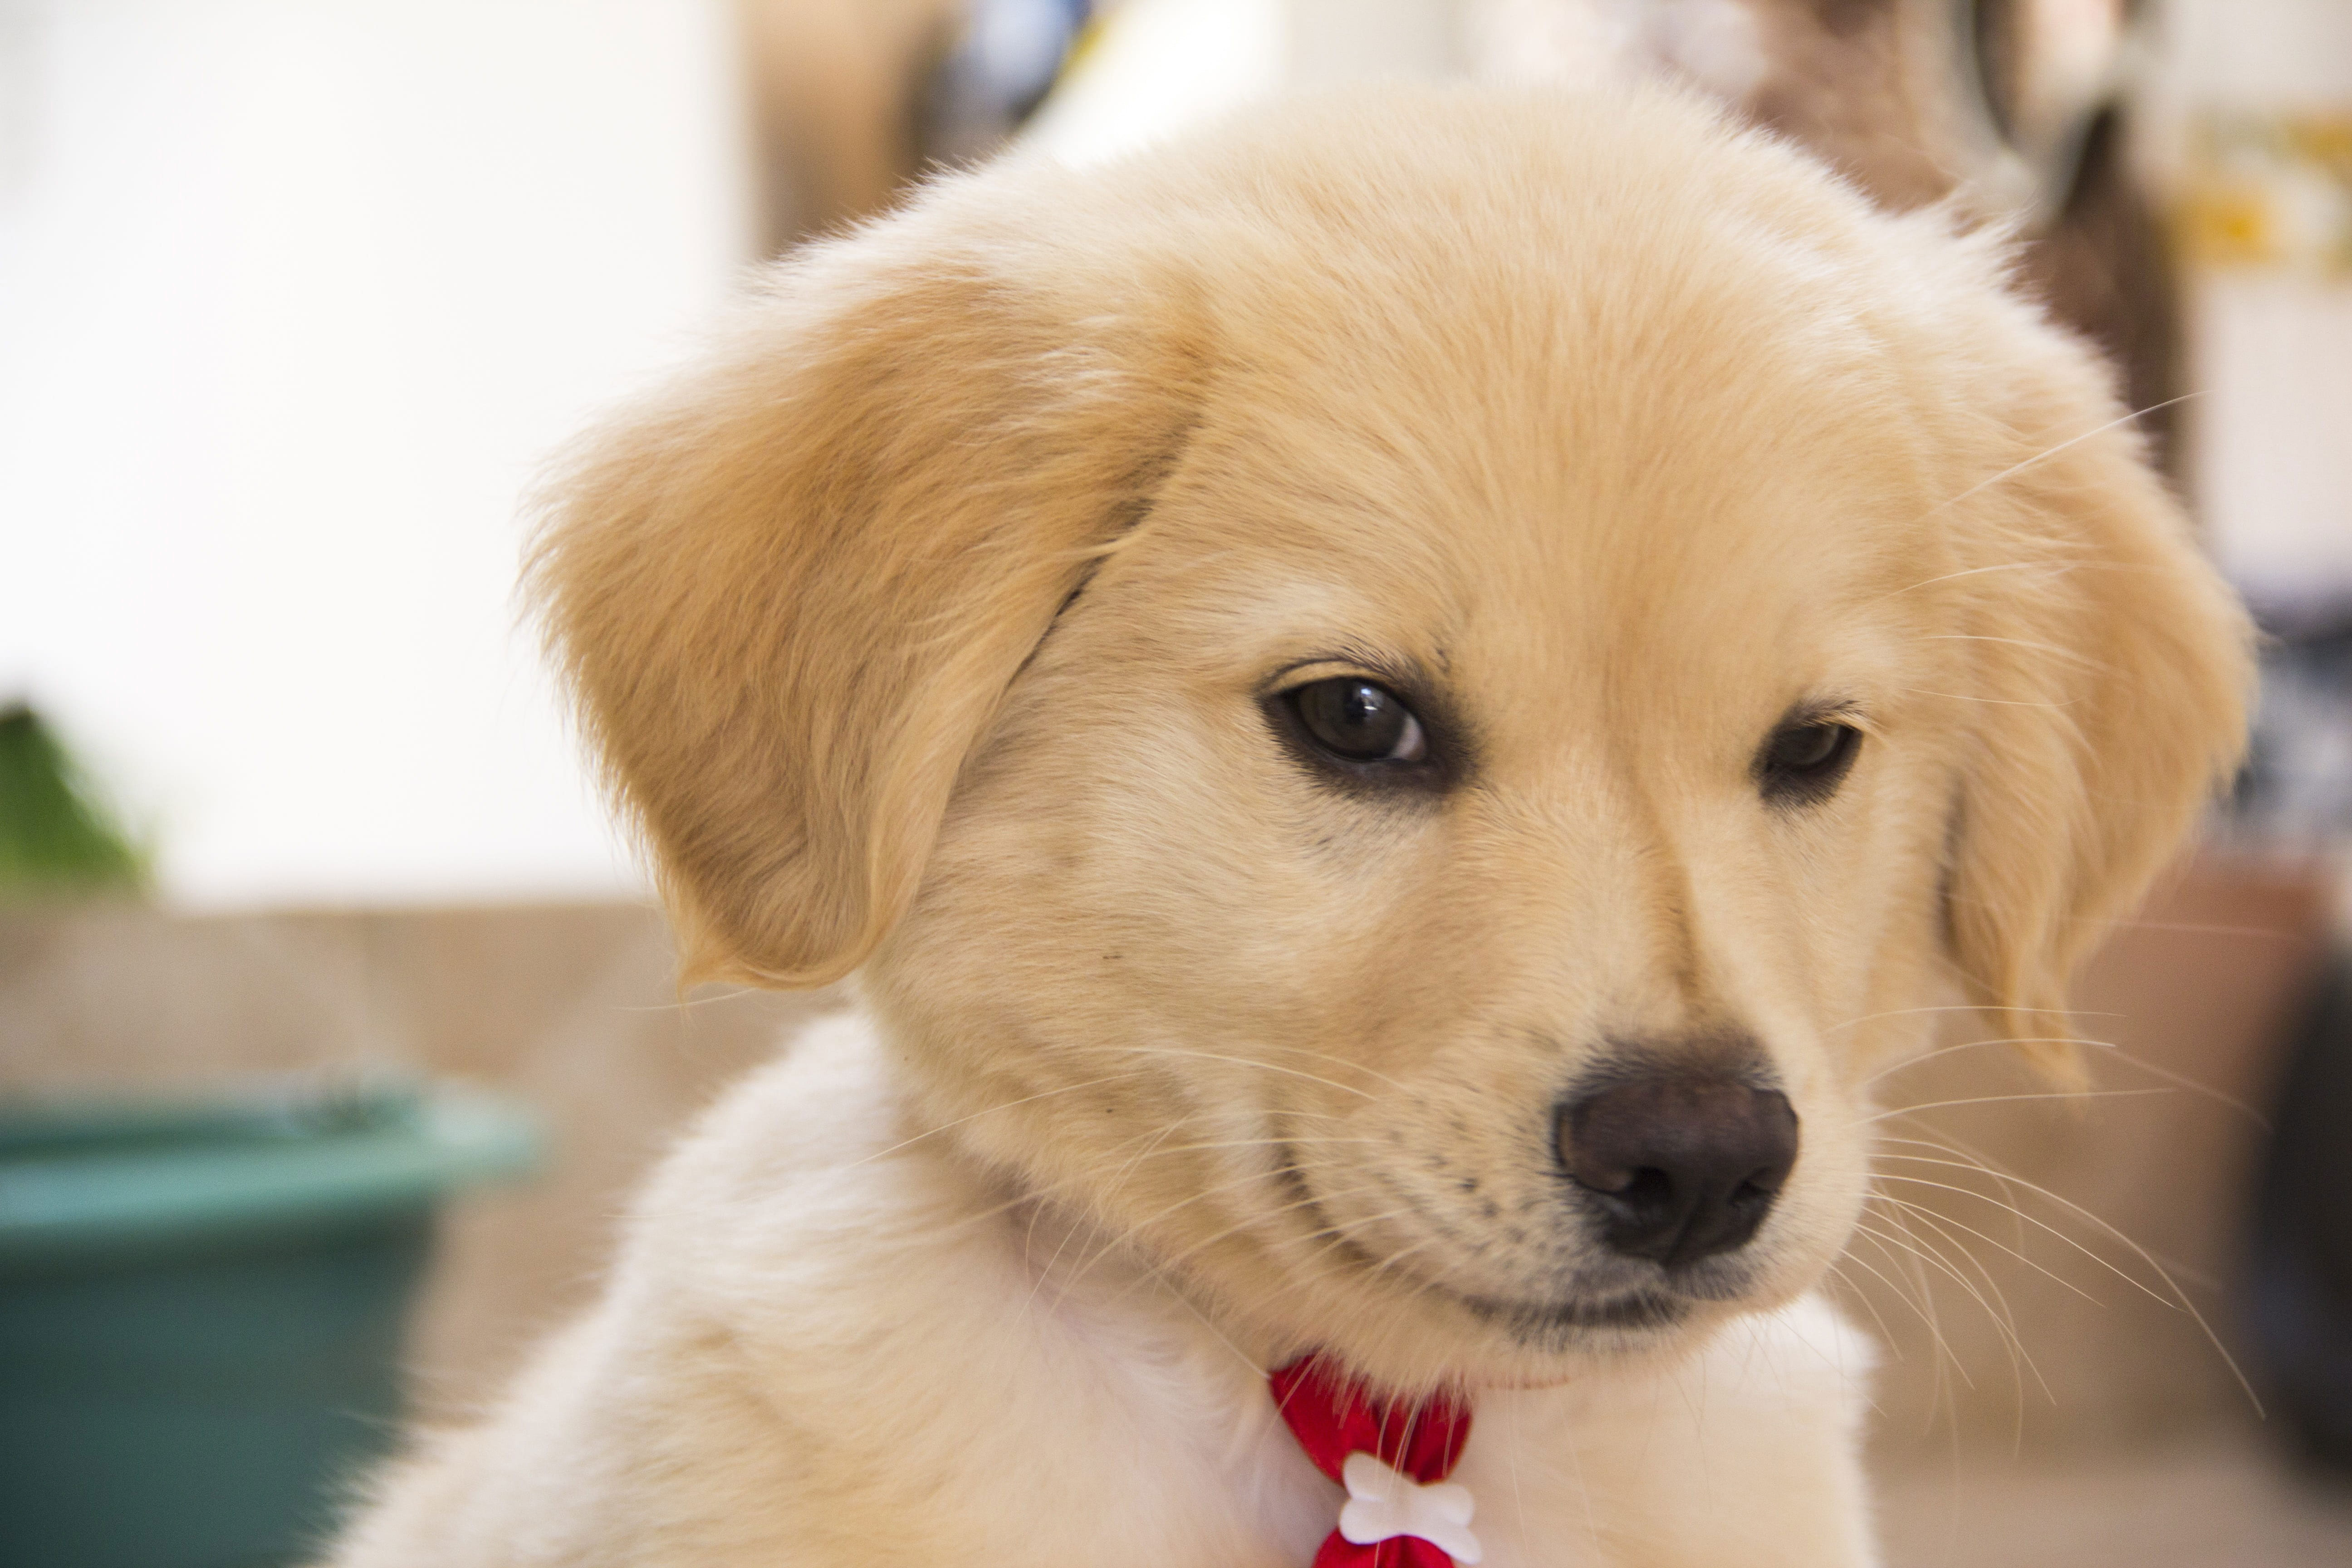 Wallpaper Closeup View Of Puppy, Dog, Cute, Adorable, Animal, adorable, Animal